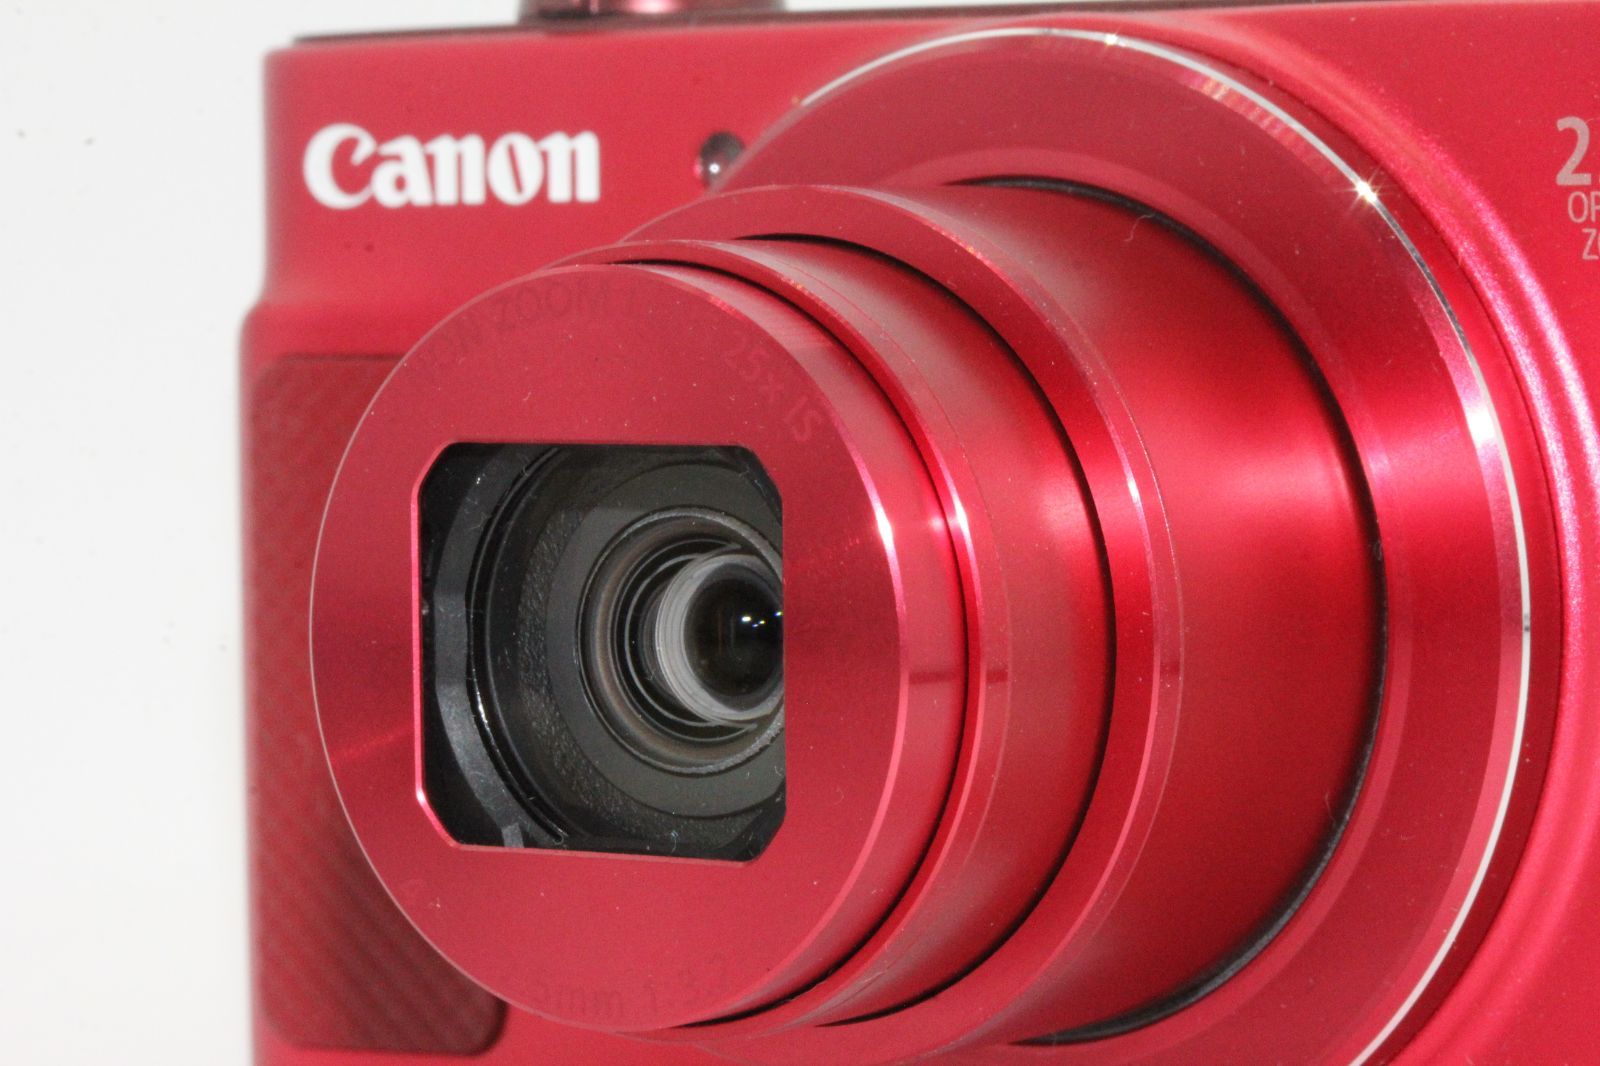 Canon コンパクトデジタルカメラ PowerShot SX620 HS レッド 光学25倍